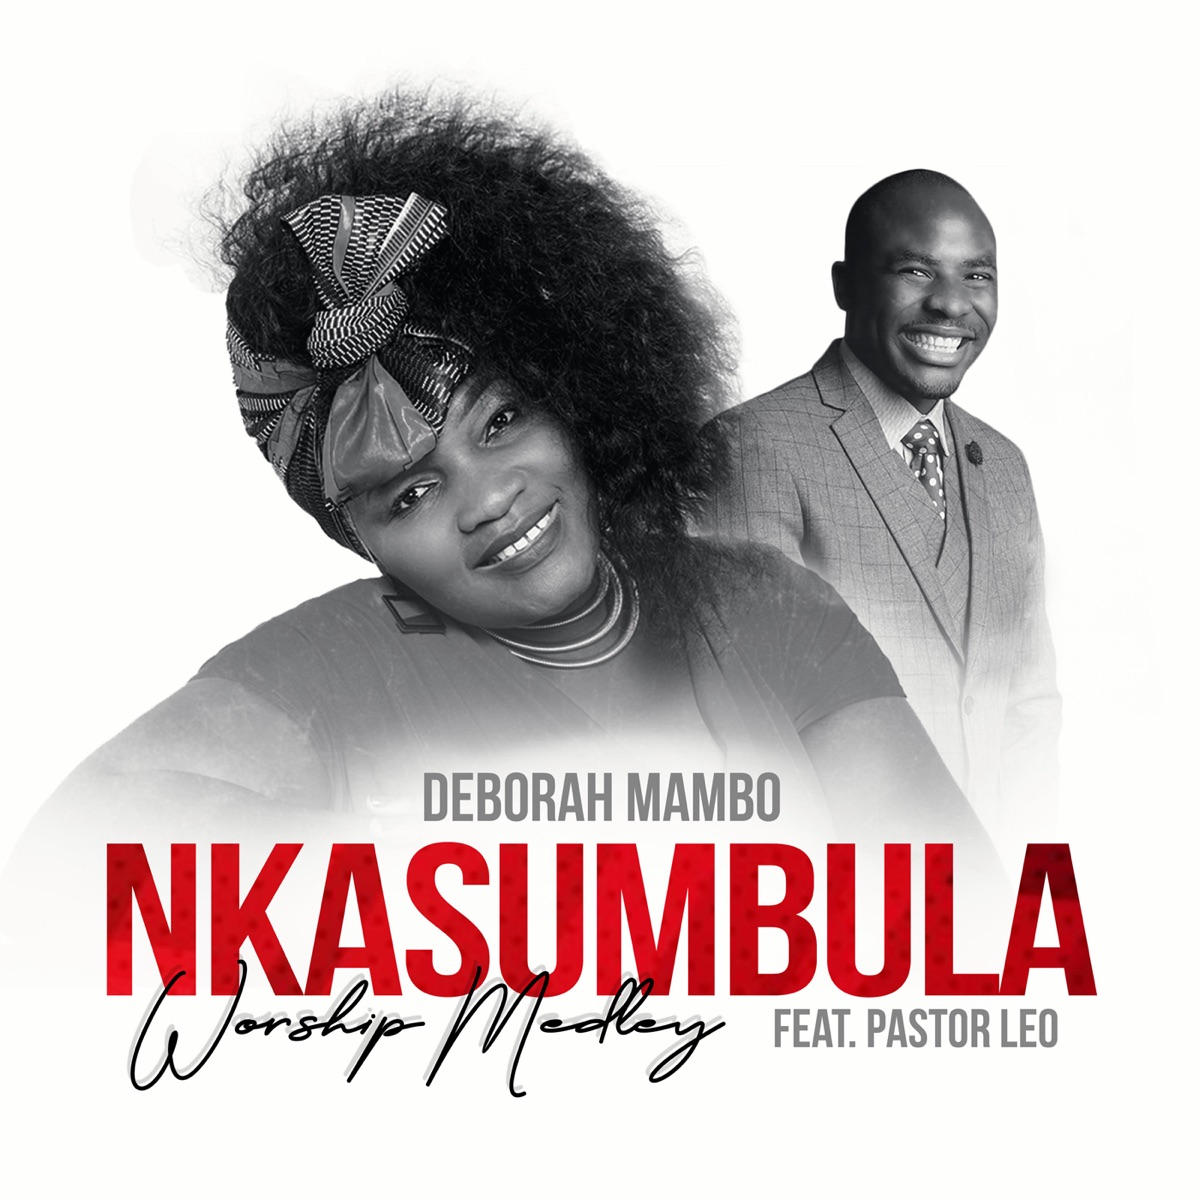 Nkasumbula Worship Medley (Ft Pastor Leo)